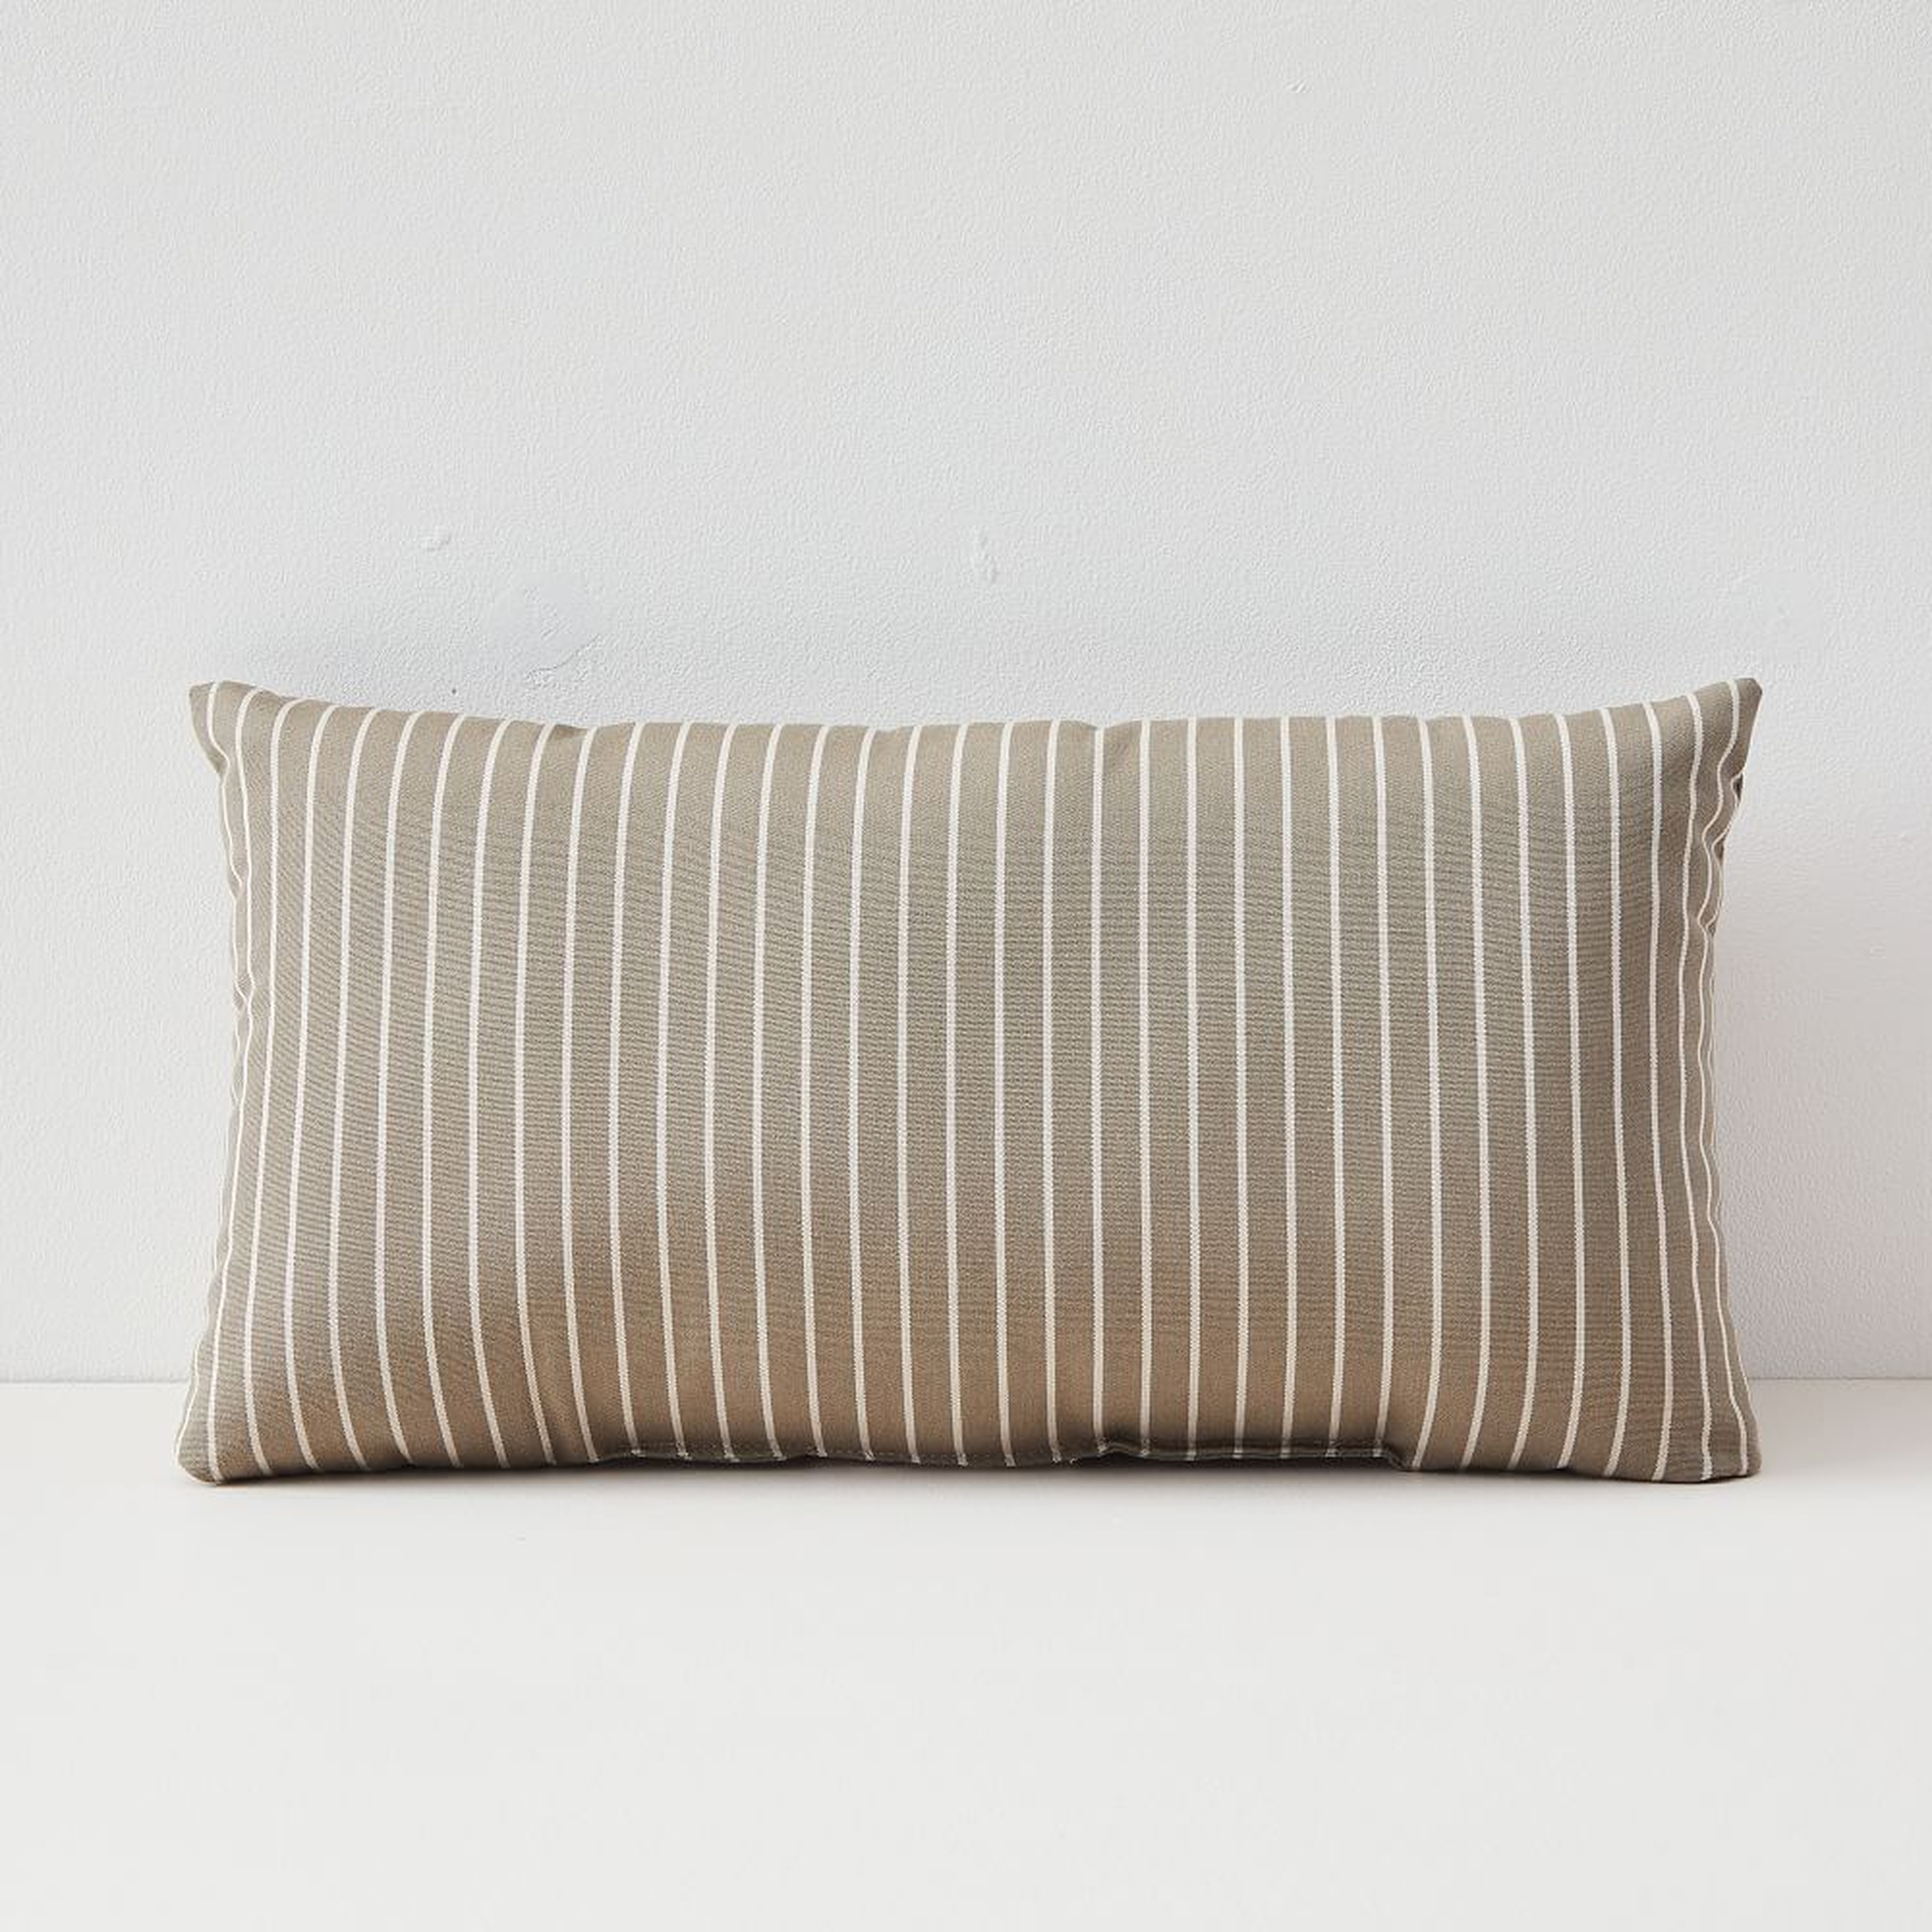 Sunbrella Indoor/Outdoor Striped Lumbar Pillow, Taupe, 21" x 12" - West Elm